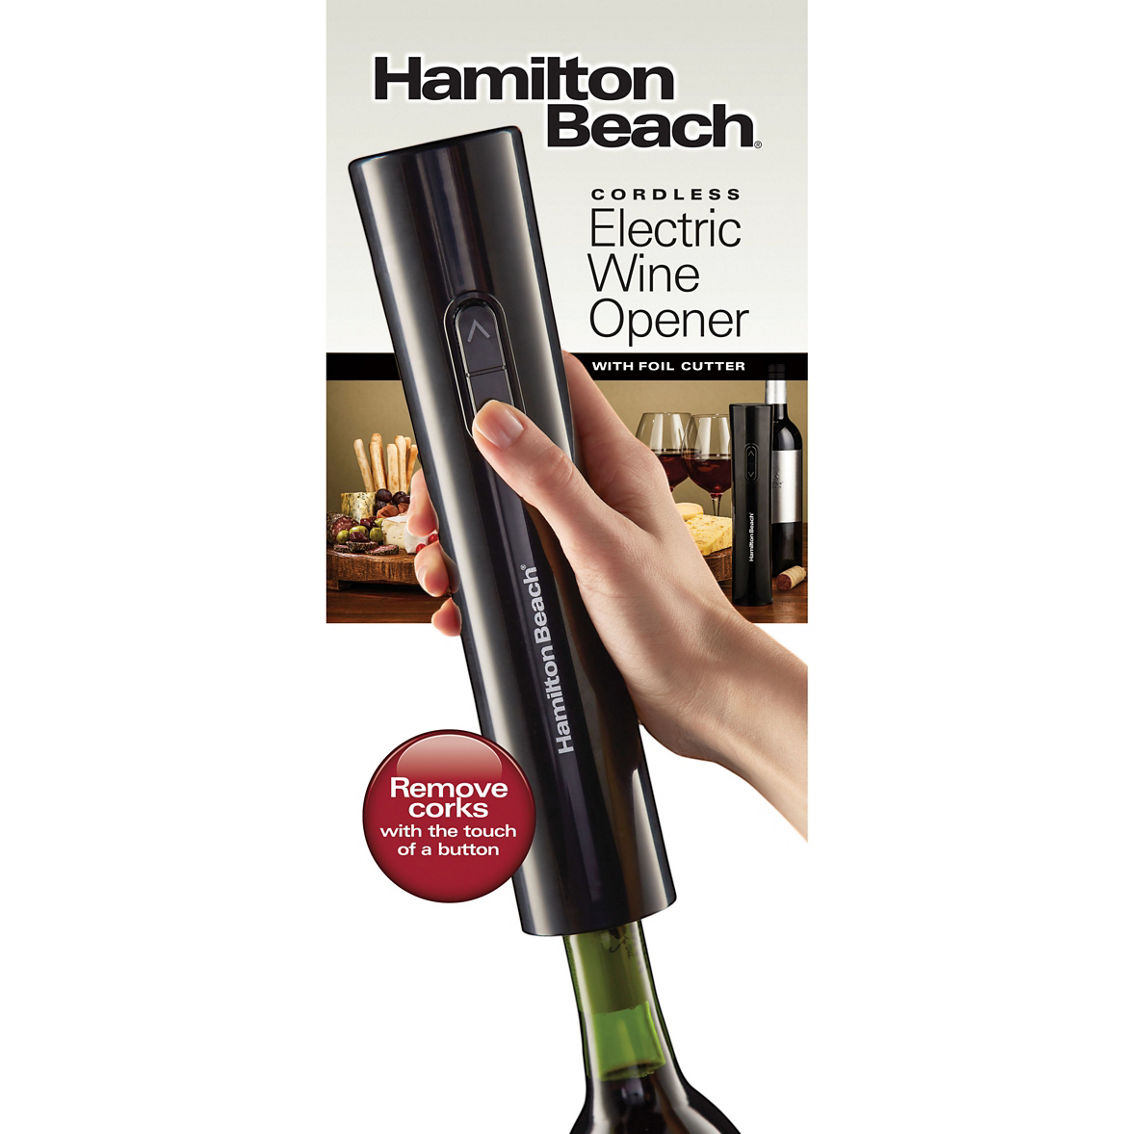 Hamilton Beach cordless Electric Wine Opener - Image 4 of 4